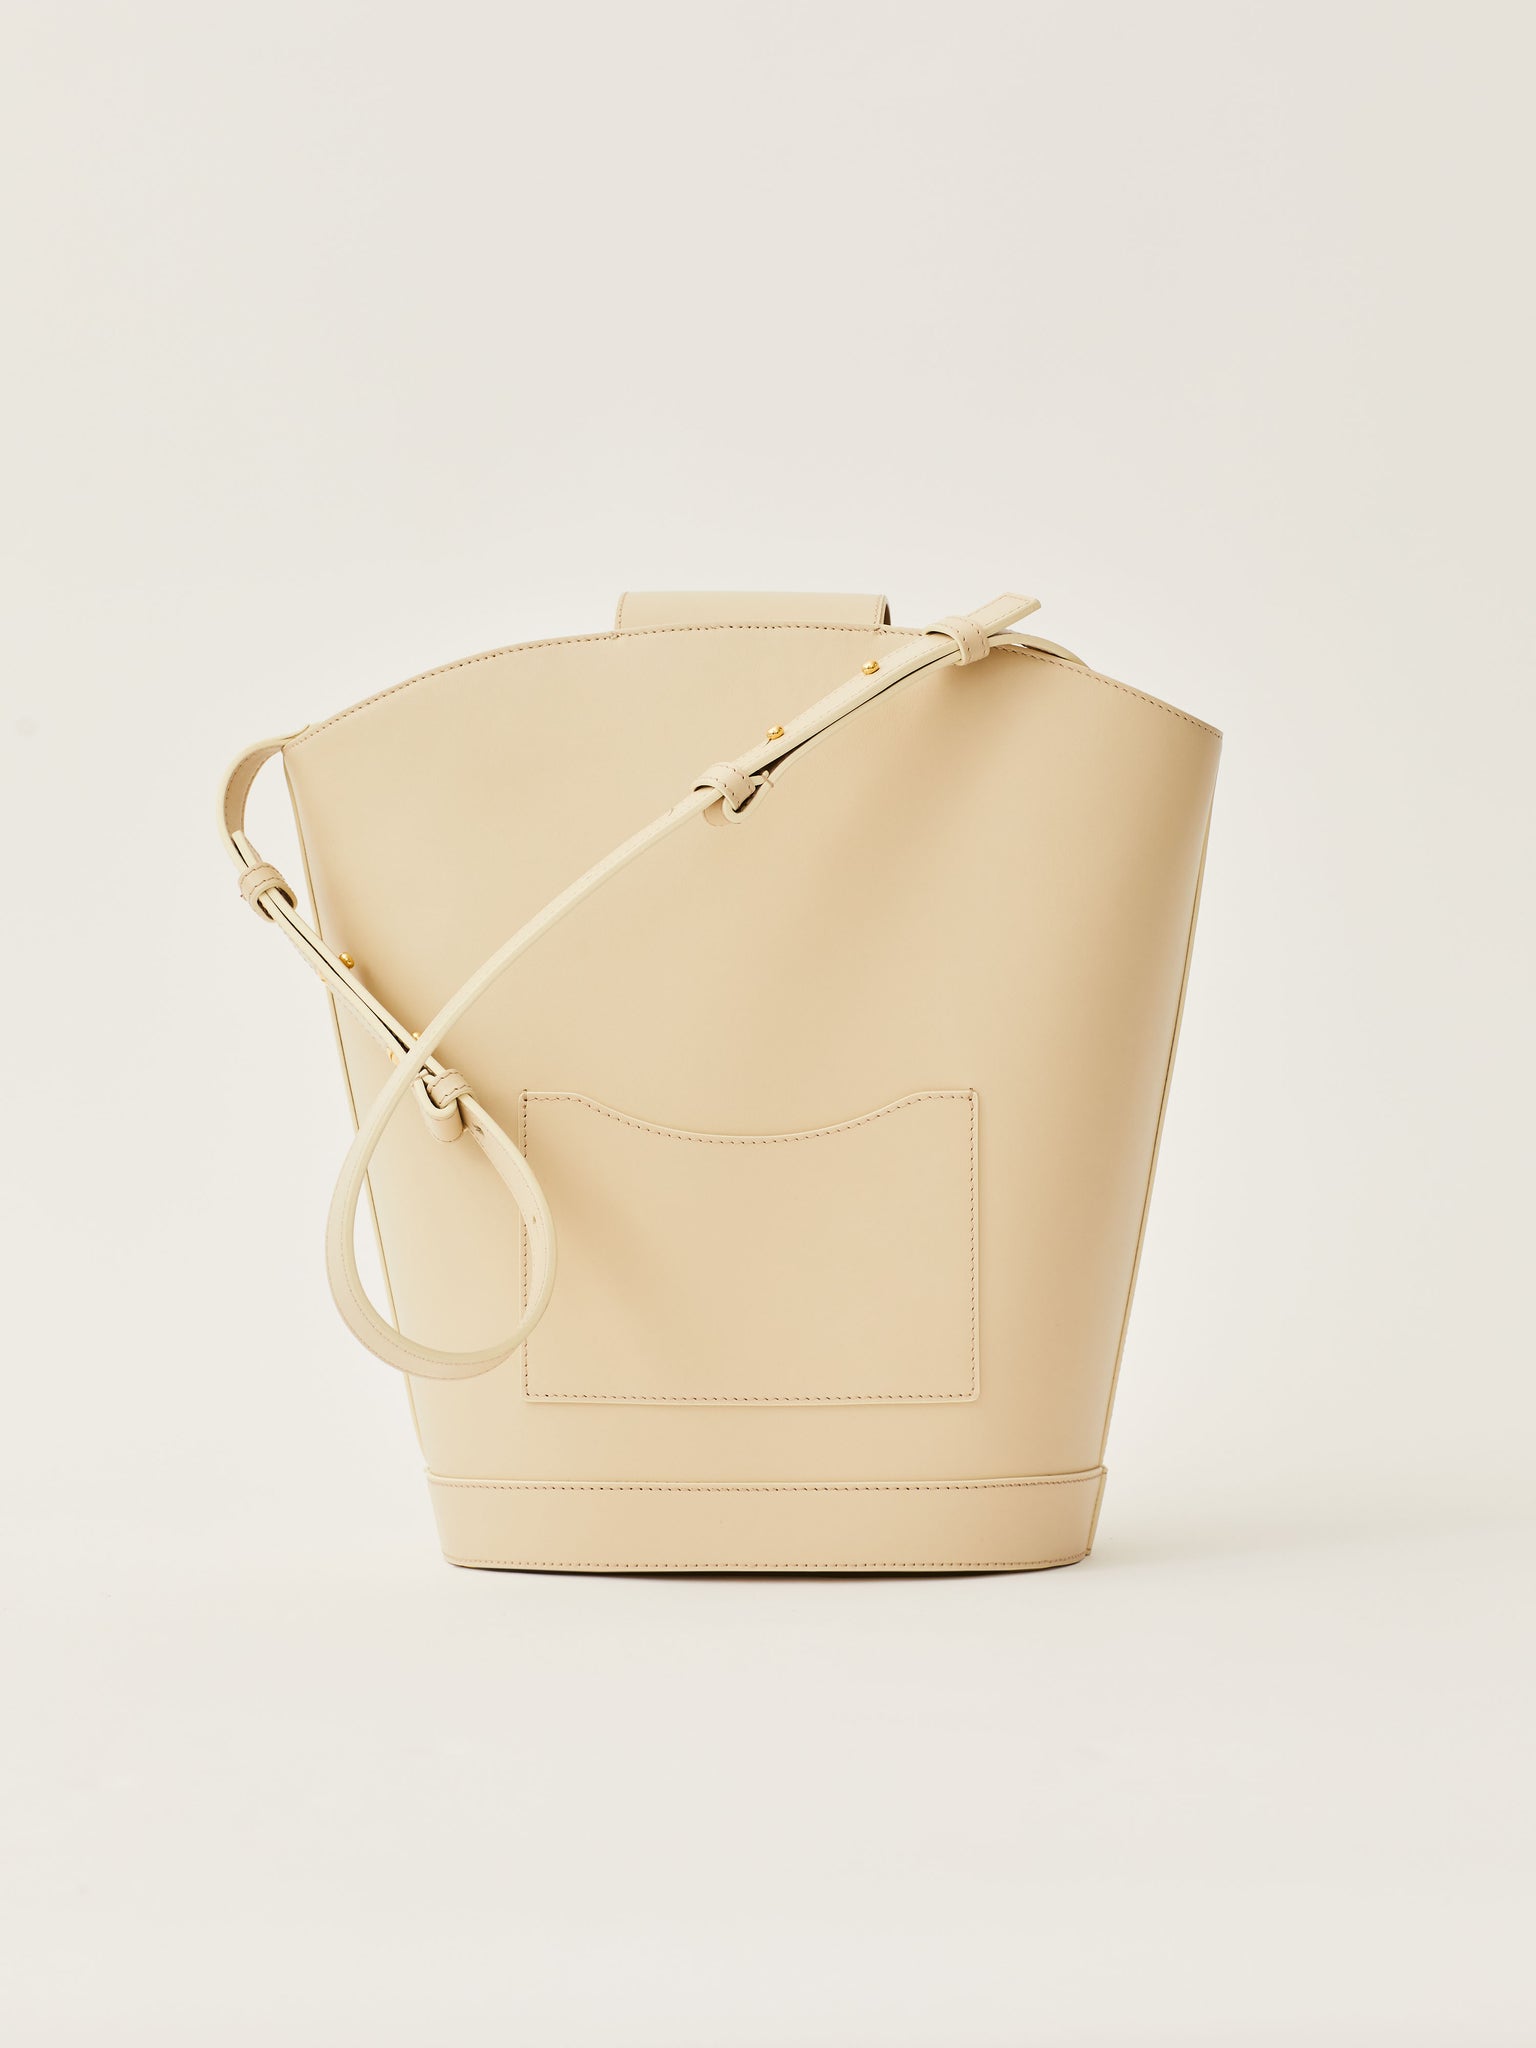 Objets Daso Ivory Leather Vivian Handbag: Back View with Draped Shoulder Strap and Back Pocket